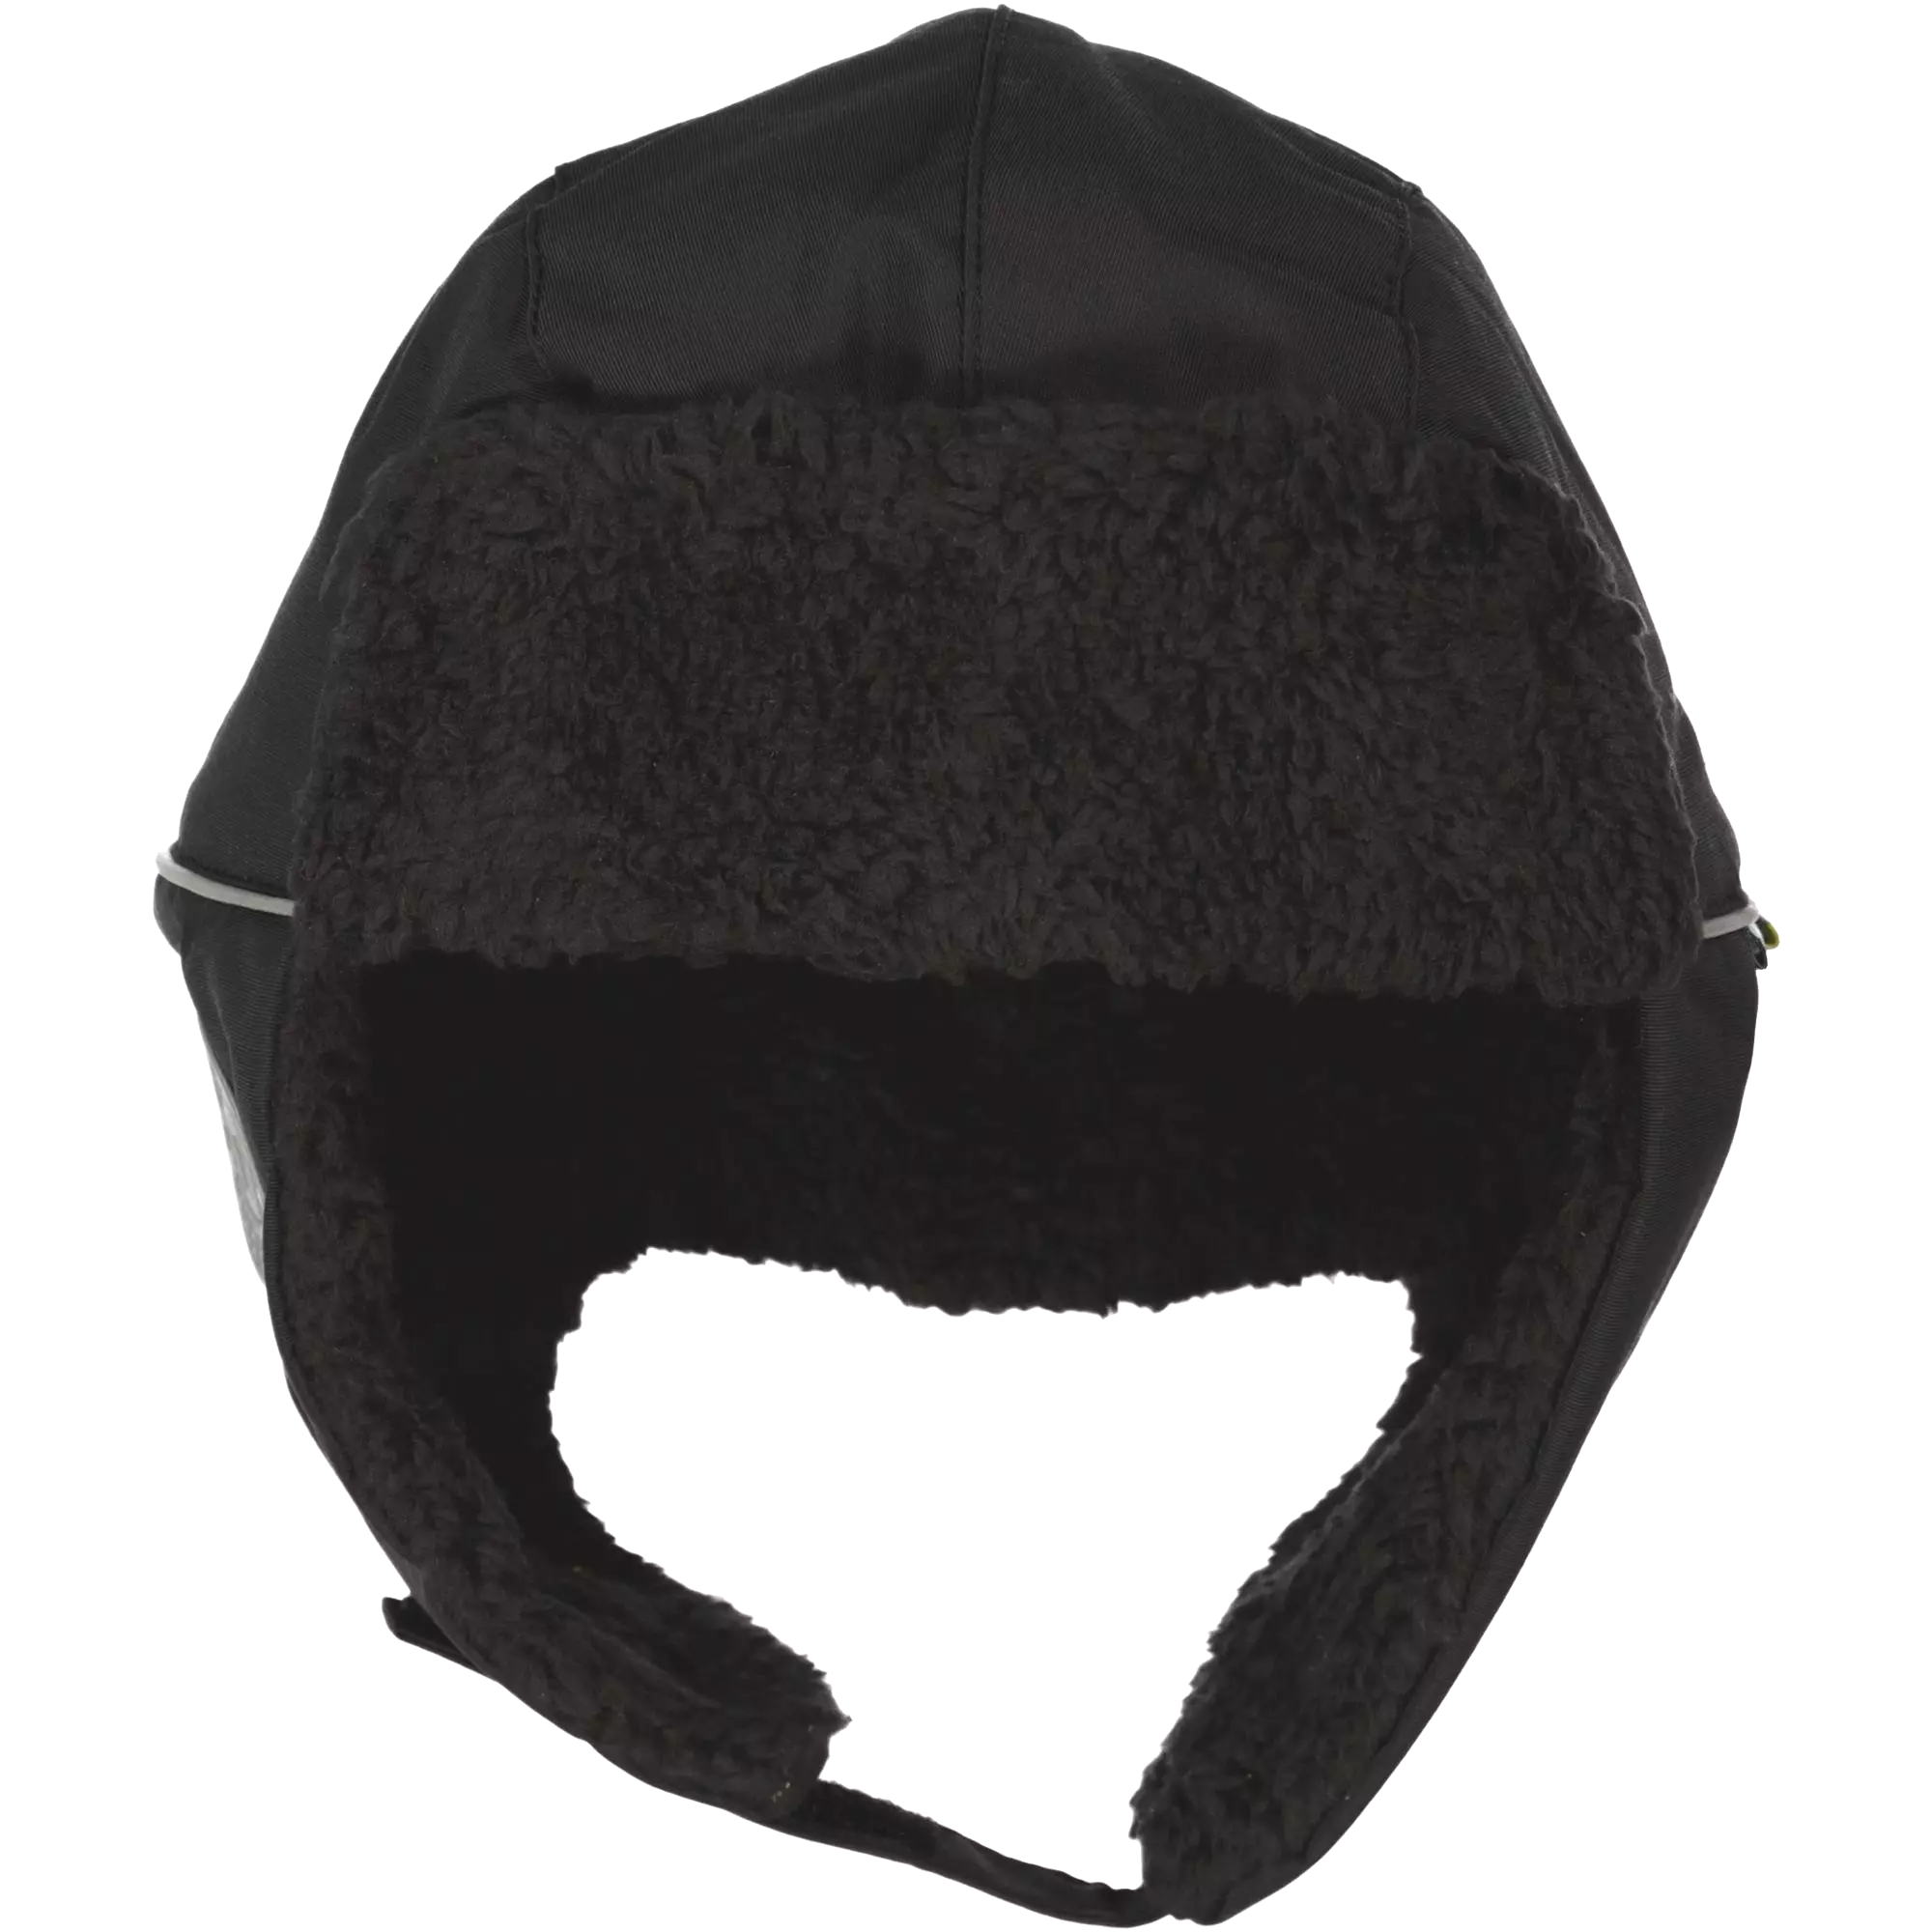 Winter helmet hat Black